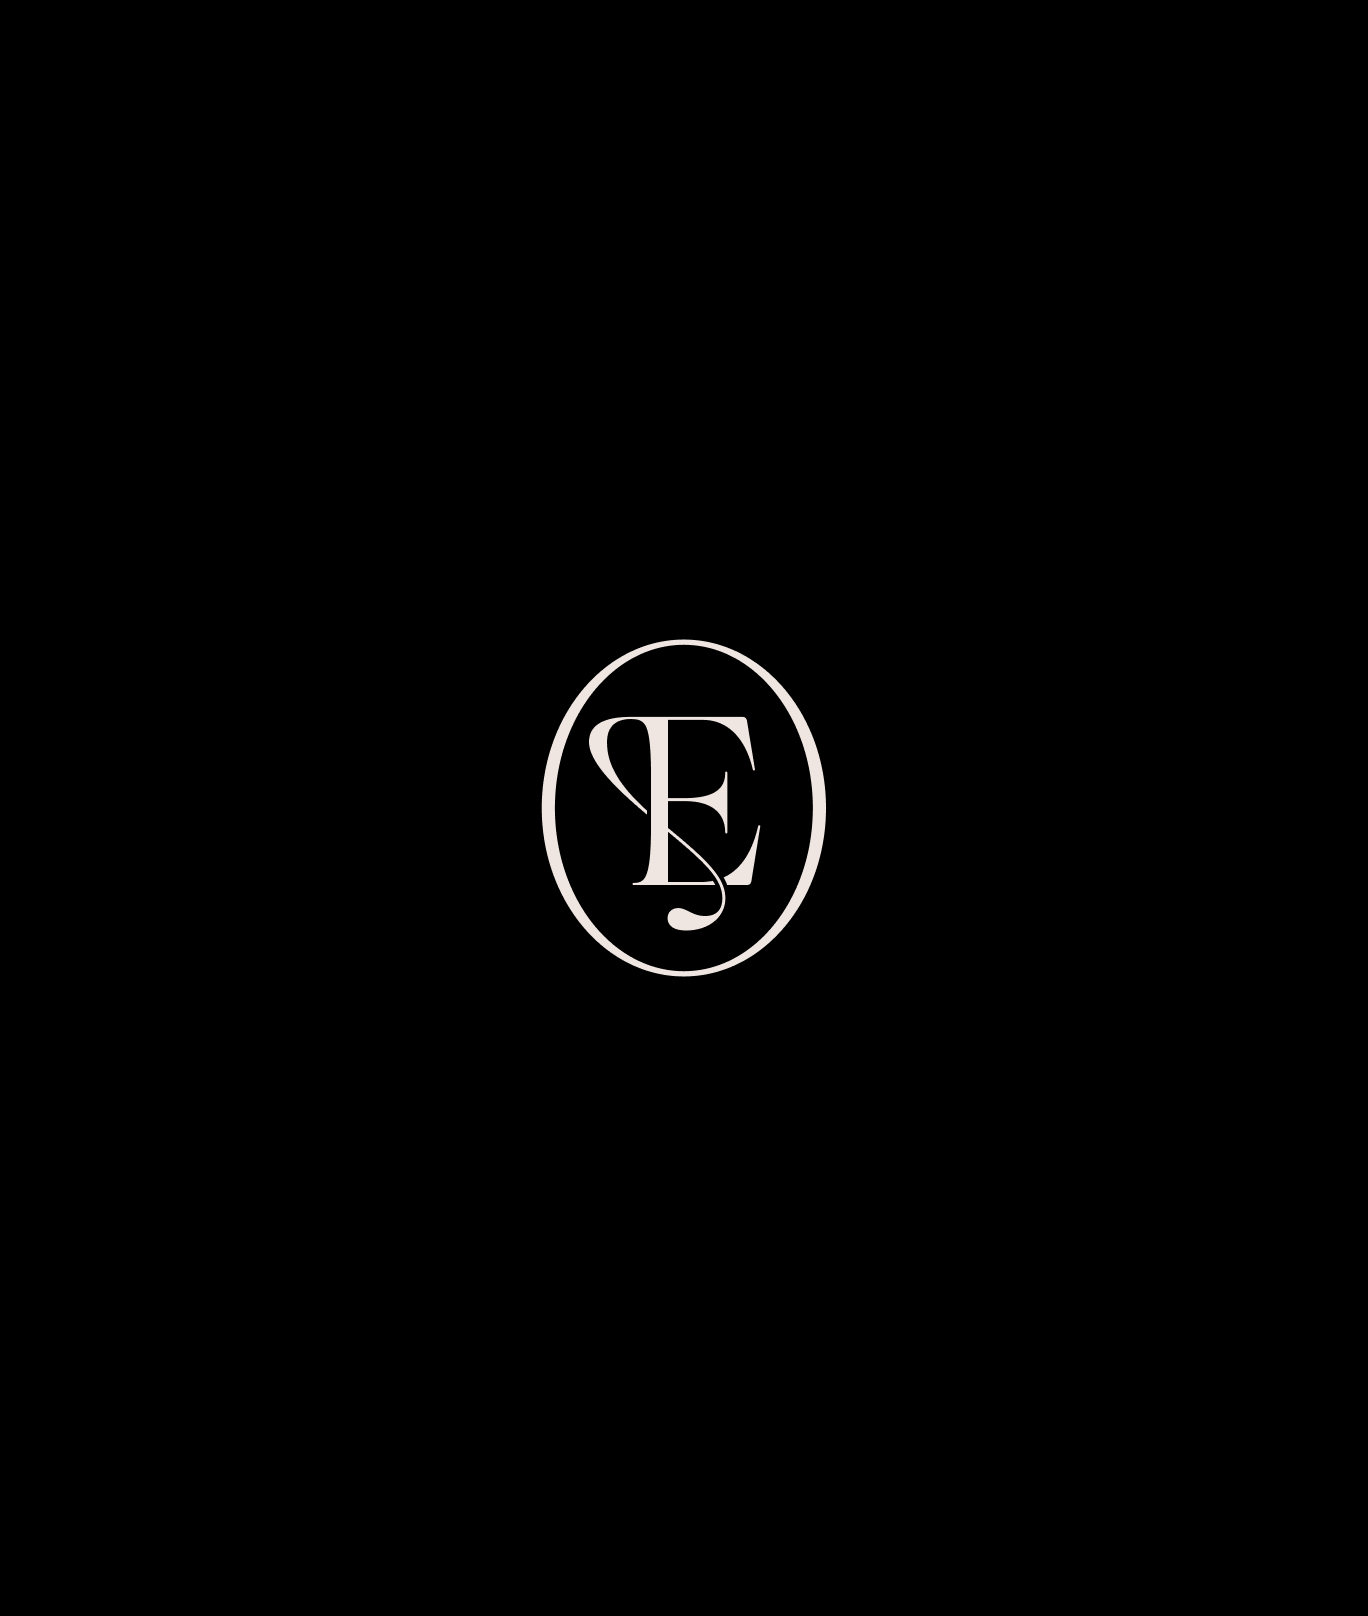 Ectogasm Logo